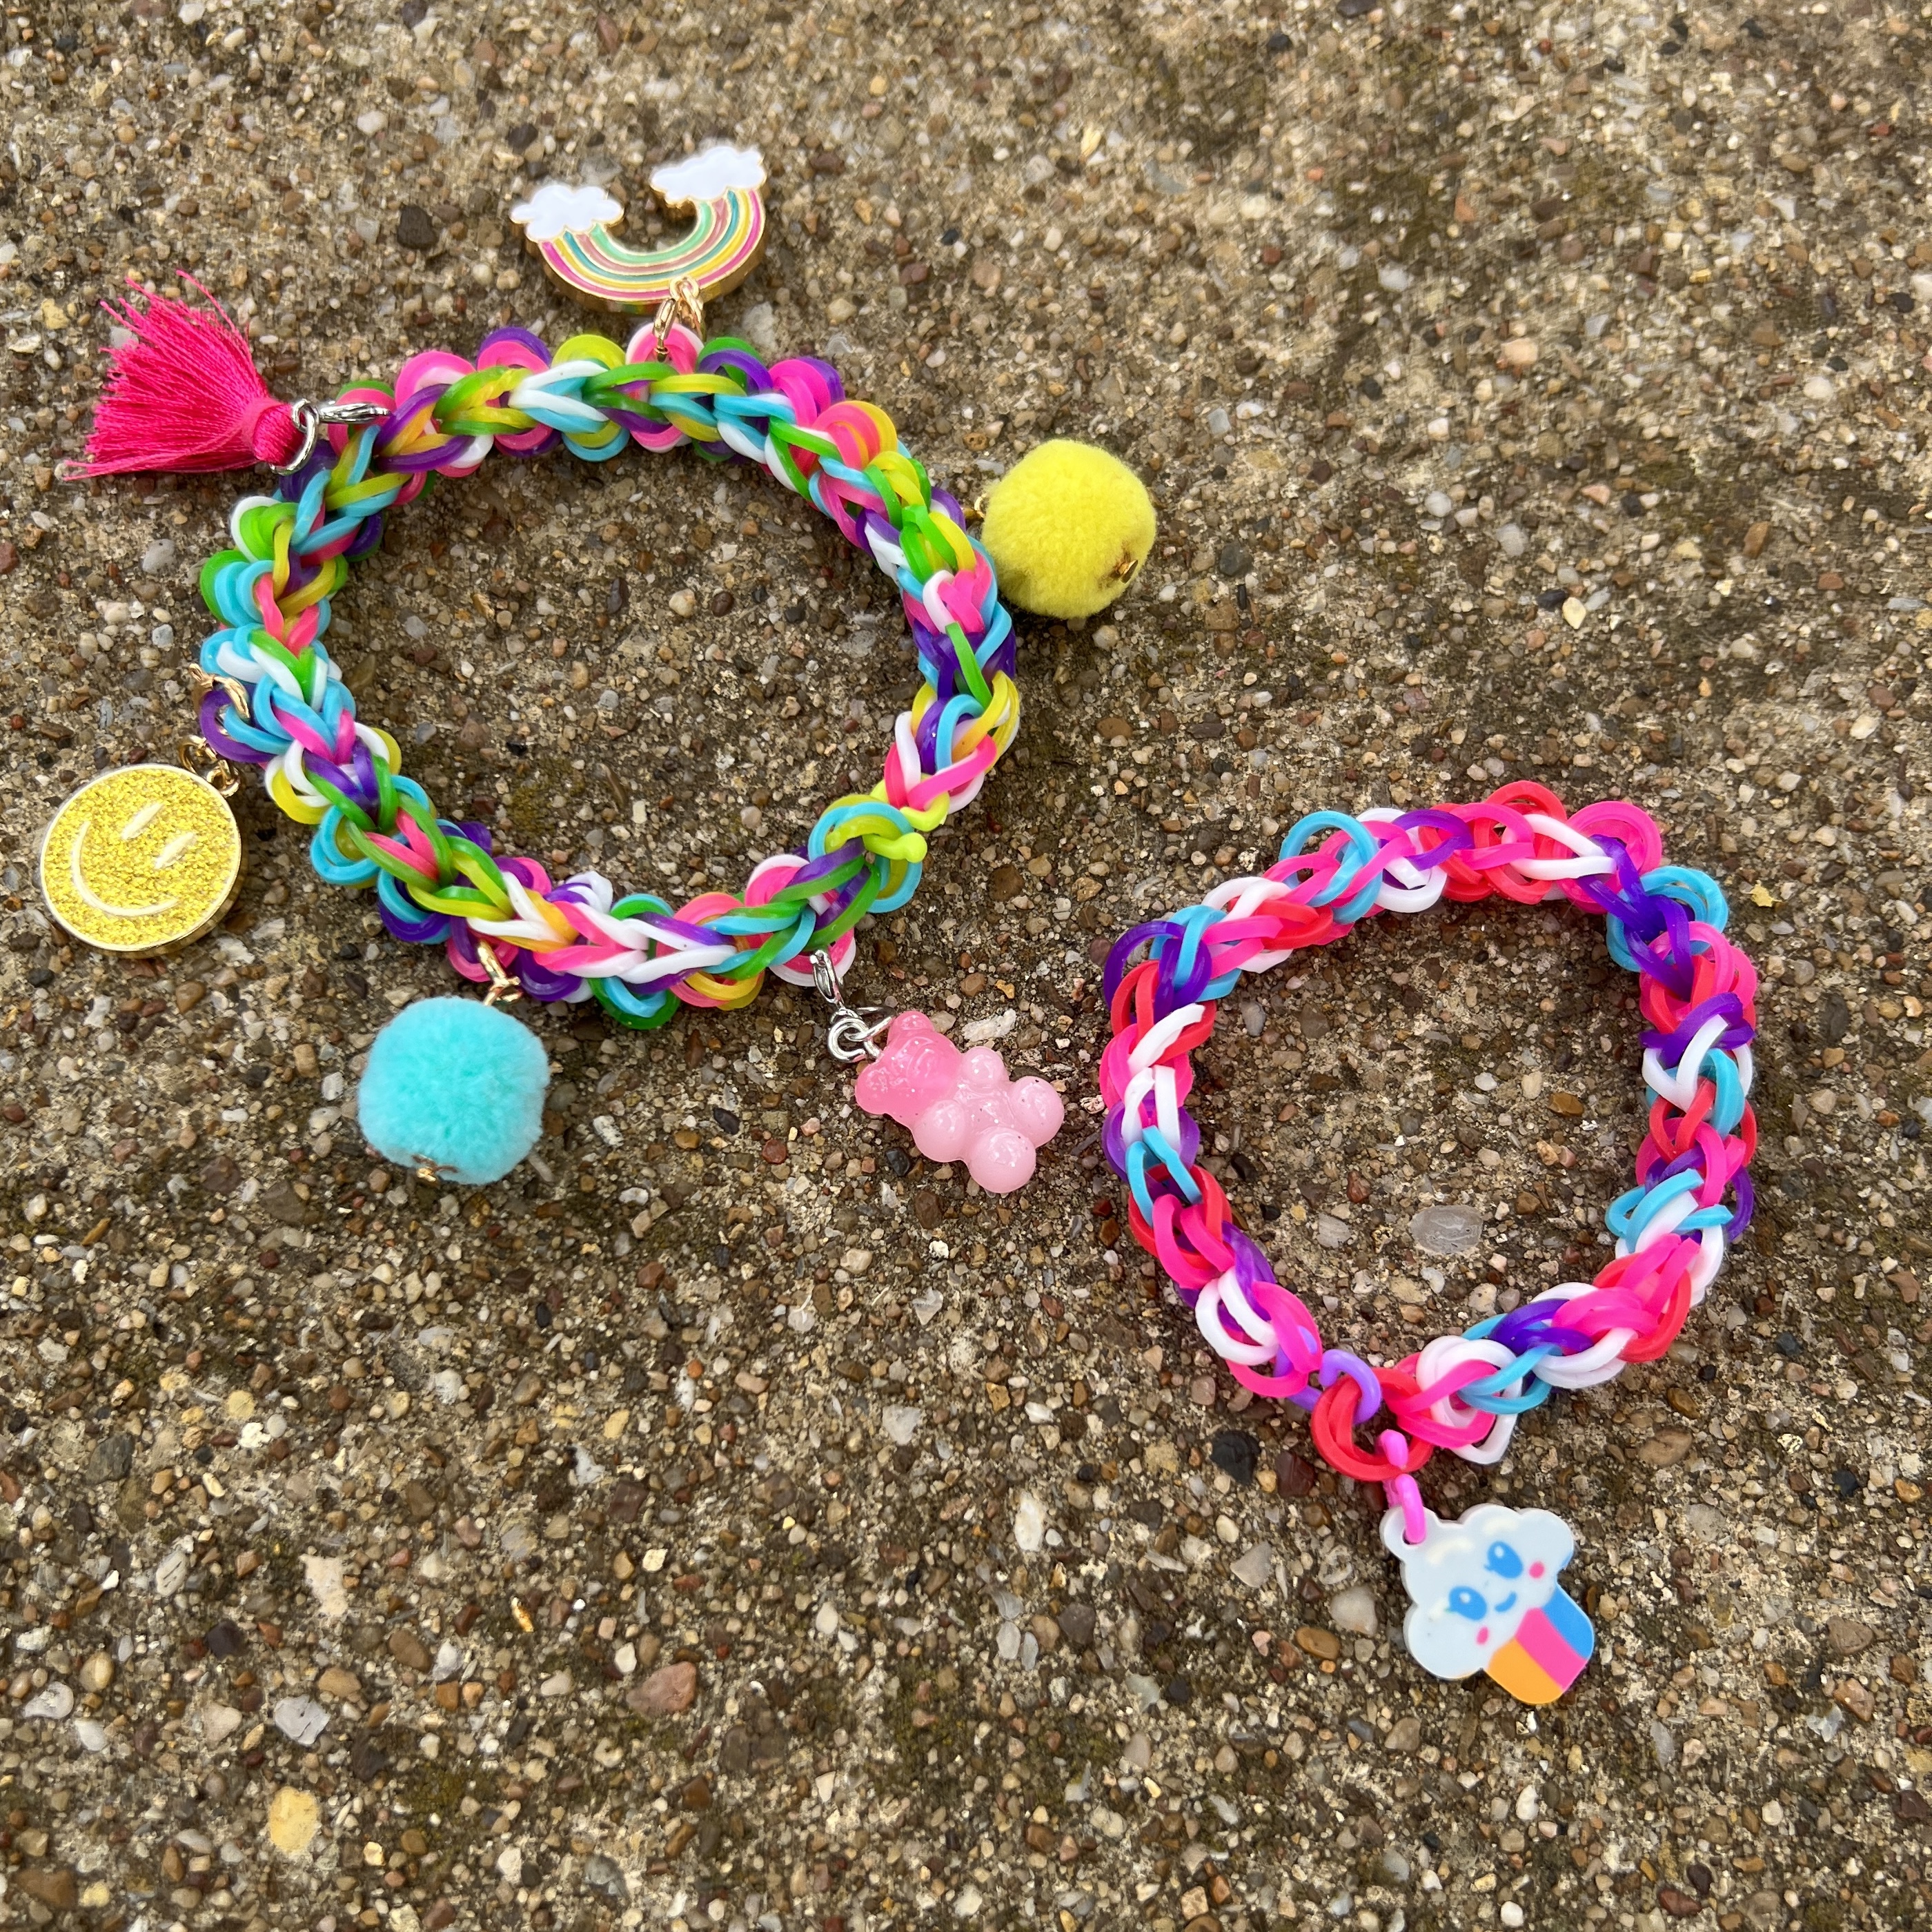 Kids Club: Rainbow Loom® Loomi-Pals™ Charm Bracelet - Free Online, Classes